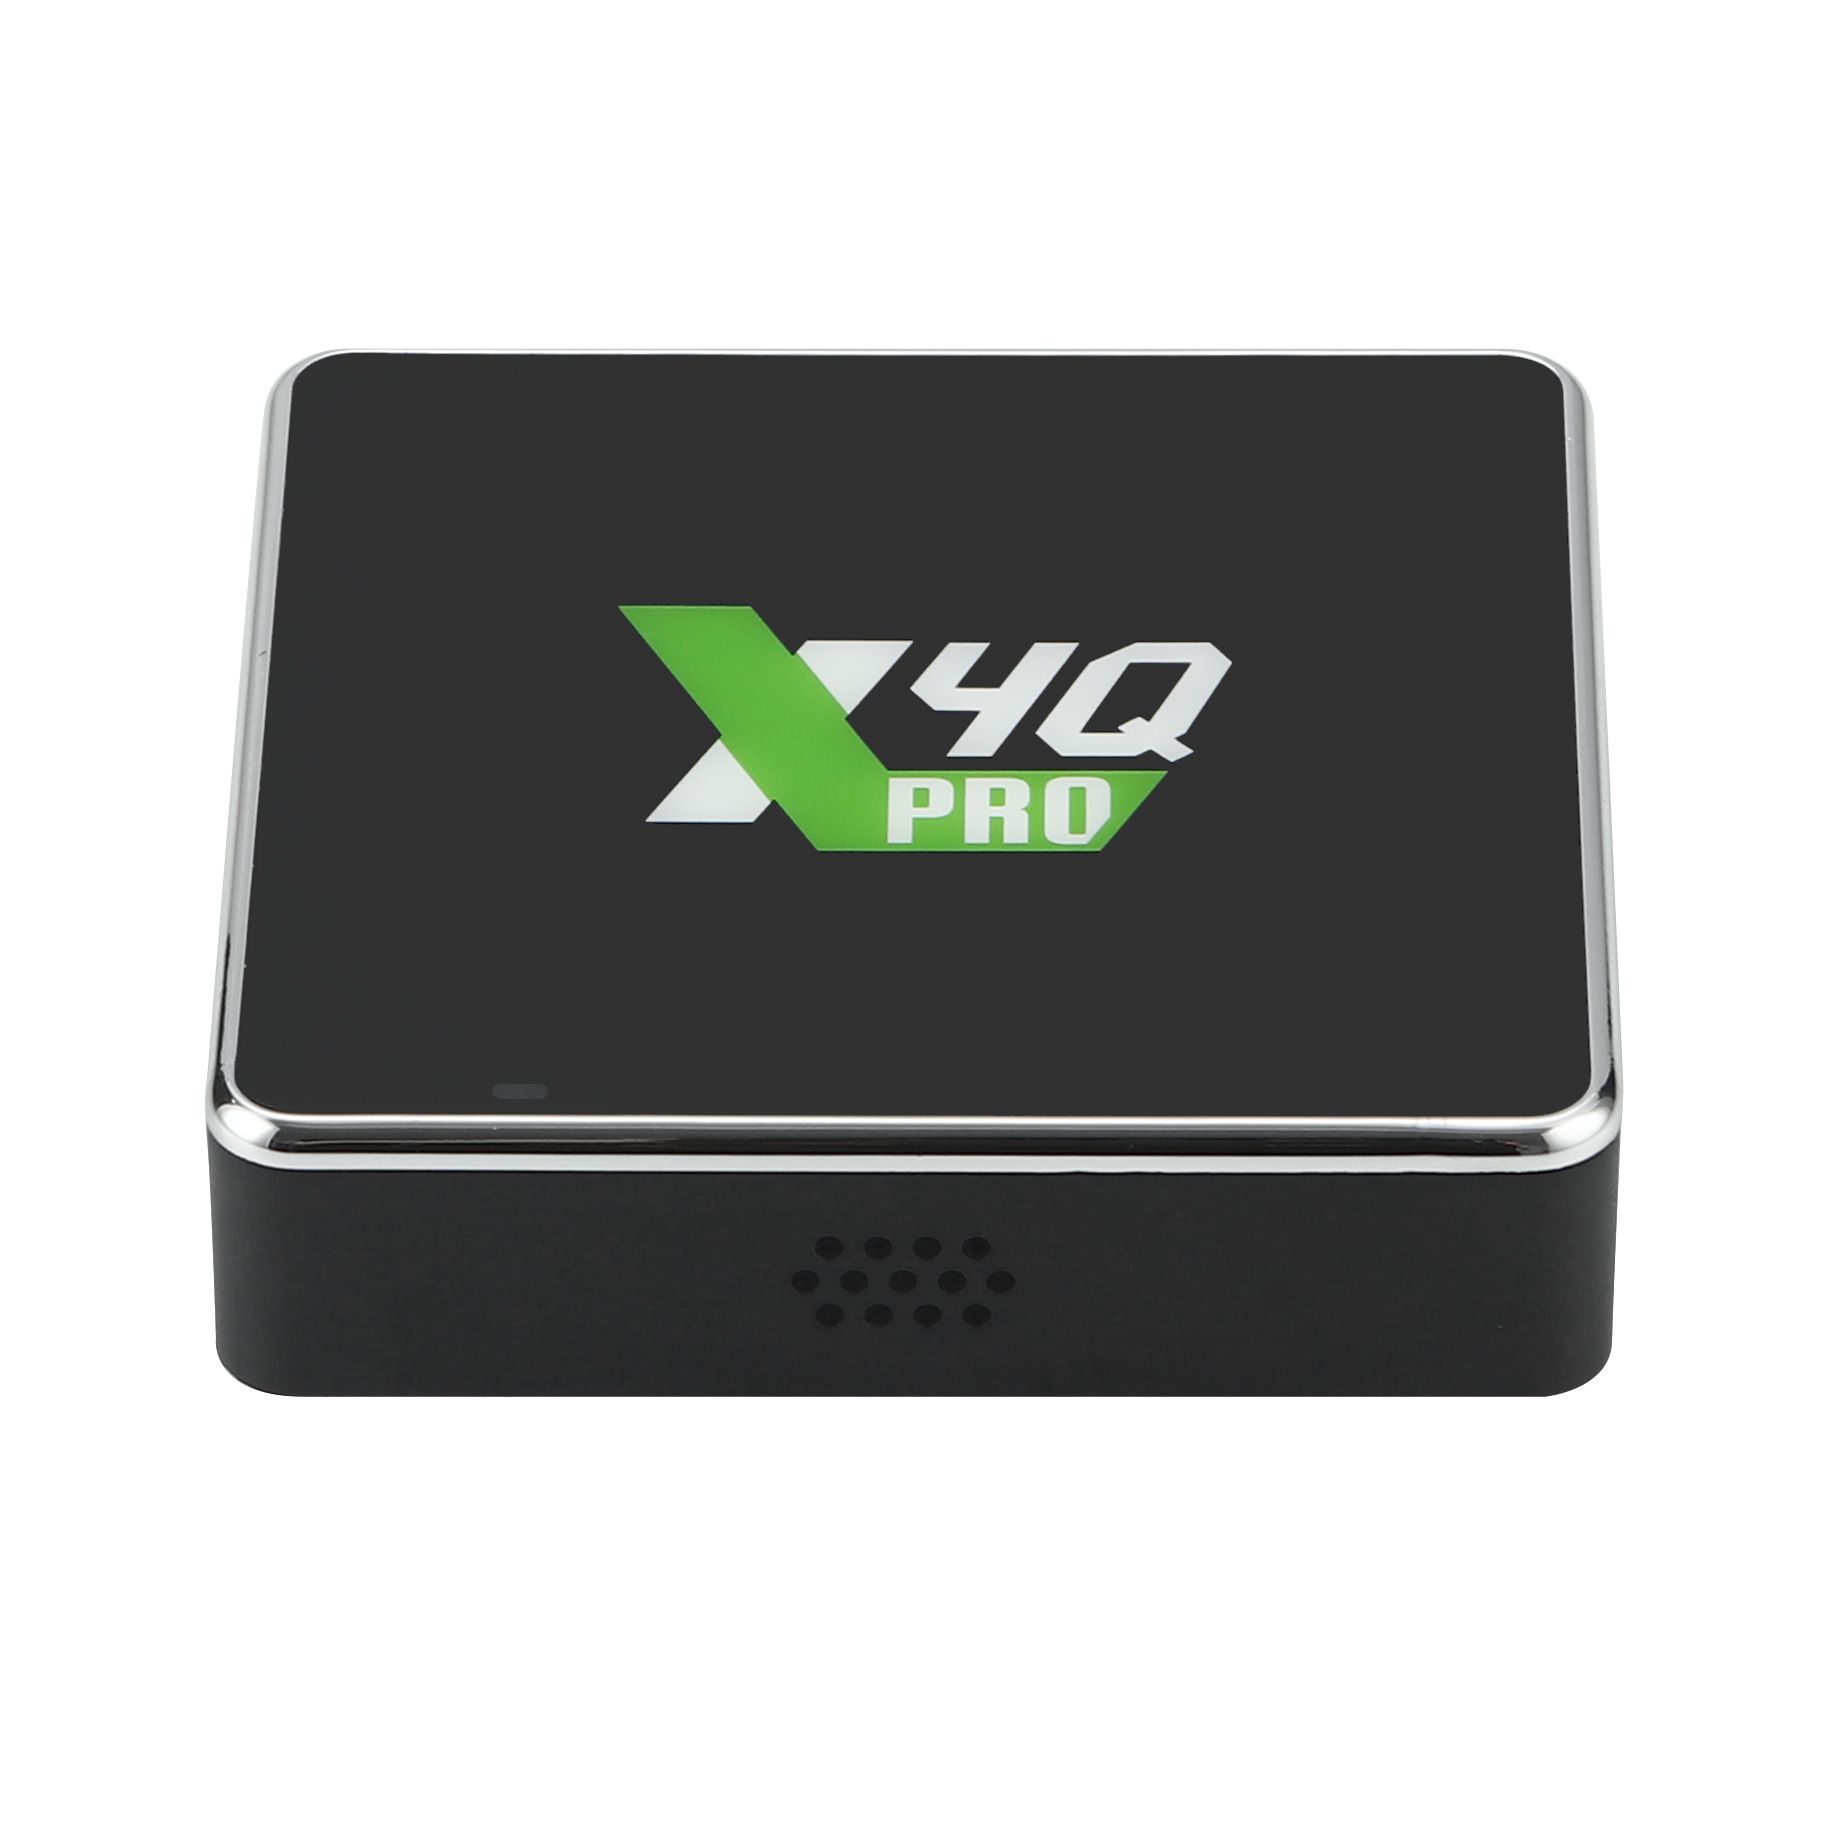 Smart TV Box Ugoos X4Q Pro/Extra CPU S905X4 RAM DDR4 Winevine L1 LAN 1000M